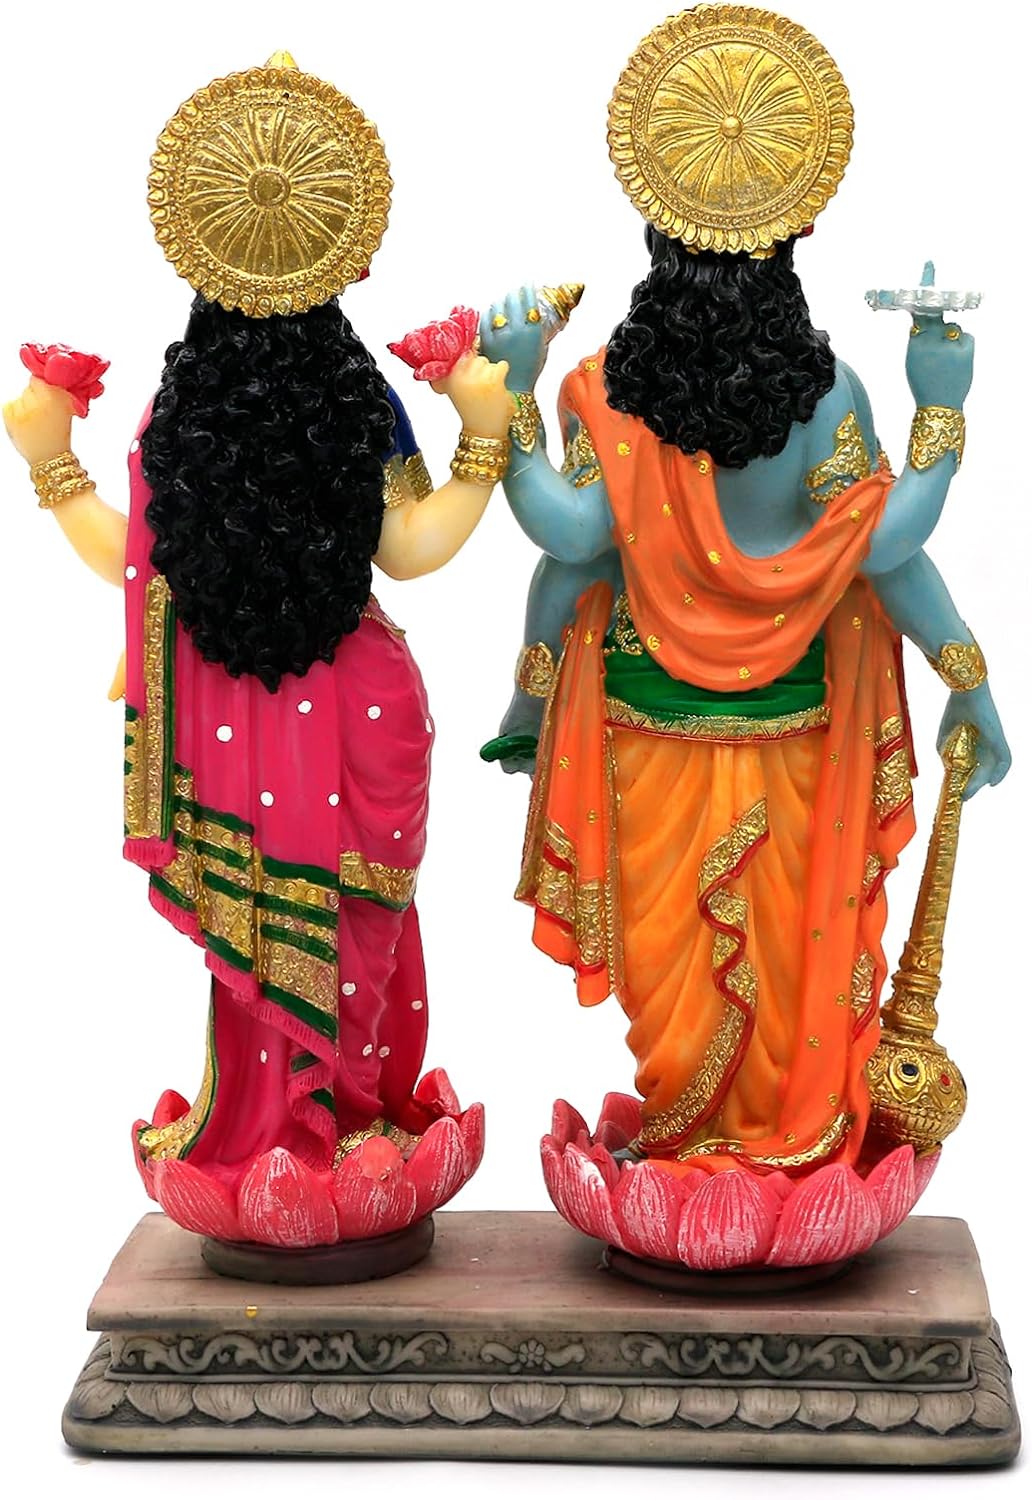 Hindu God Lakshmi Narayan Statue - 8.8” H Laxmi Narayan Sculpture Indian Diwali Pooja Item Murti Gifts for Indian Couple Friends Family Diwali Gifts Home Office Mandir Temple Puja Decor